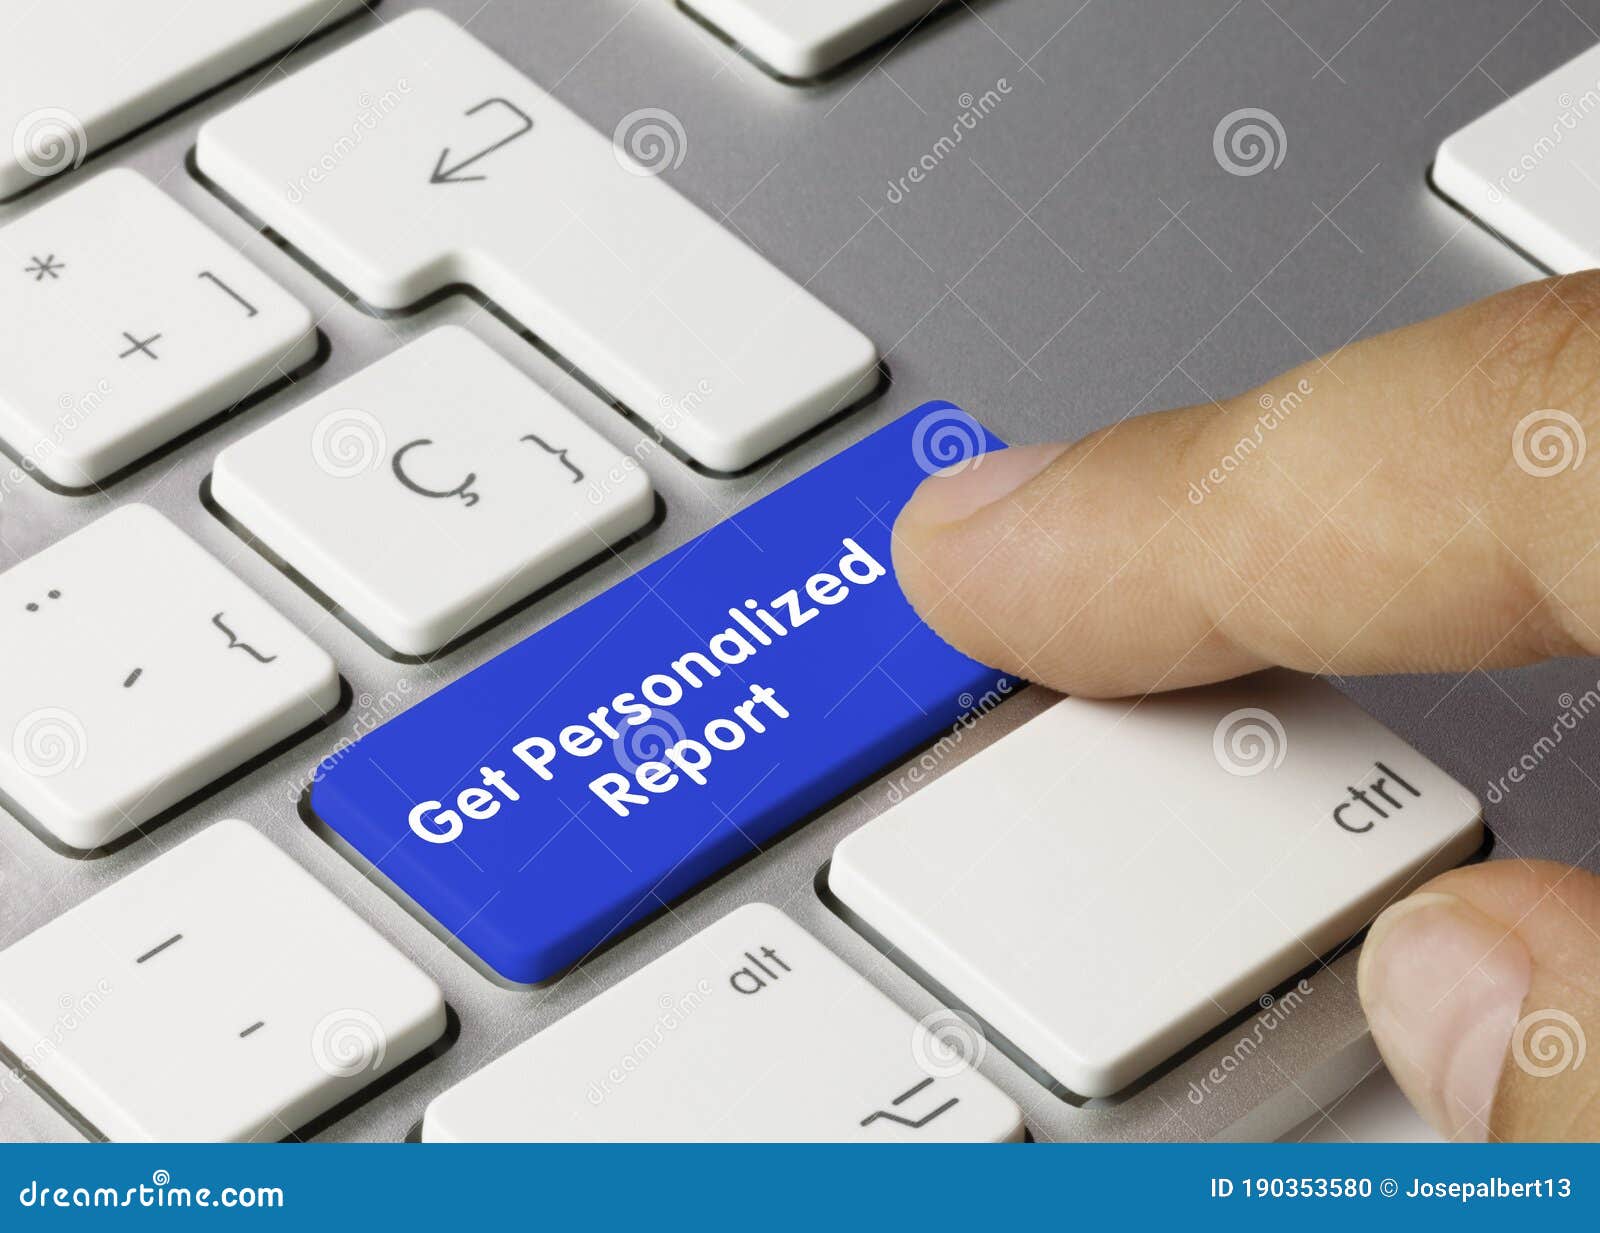 get personalized report - inscription on blue keyboard key